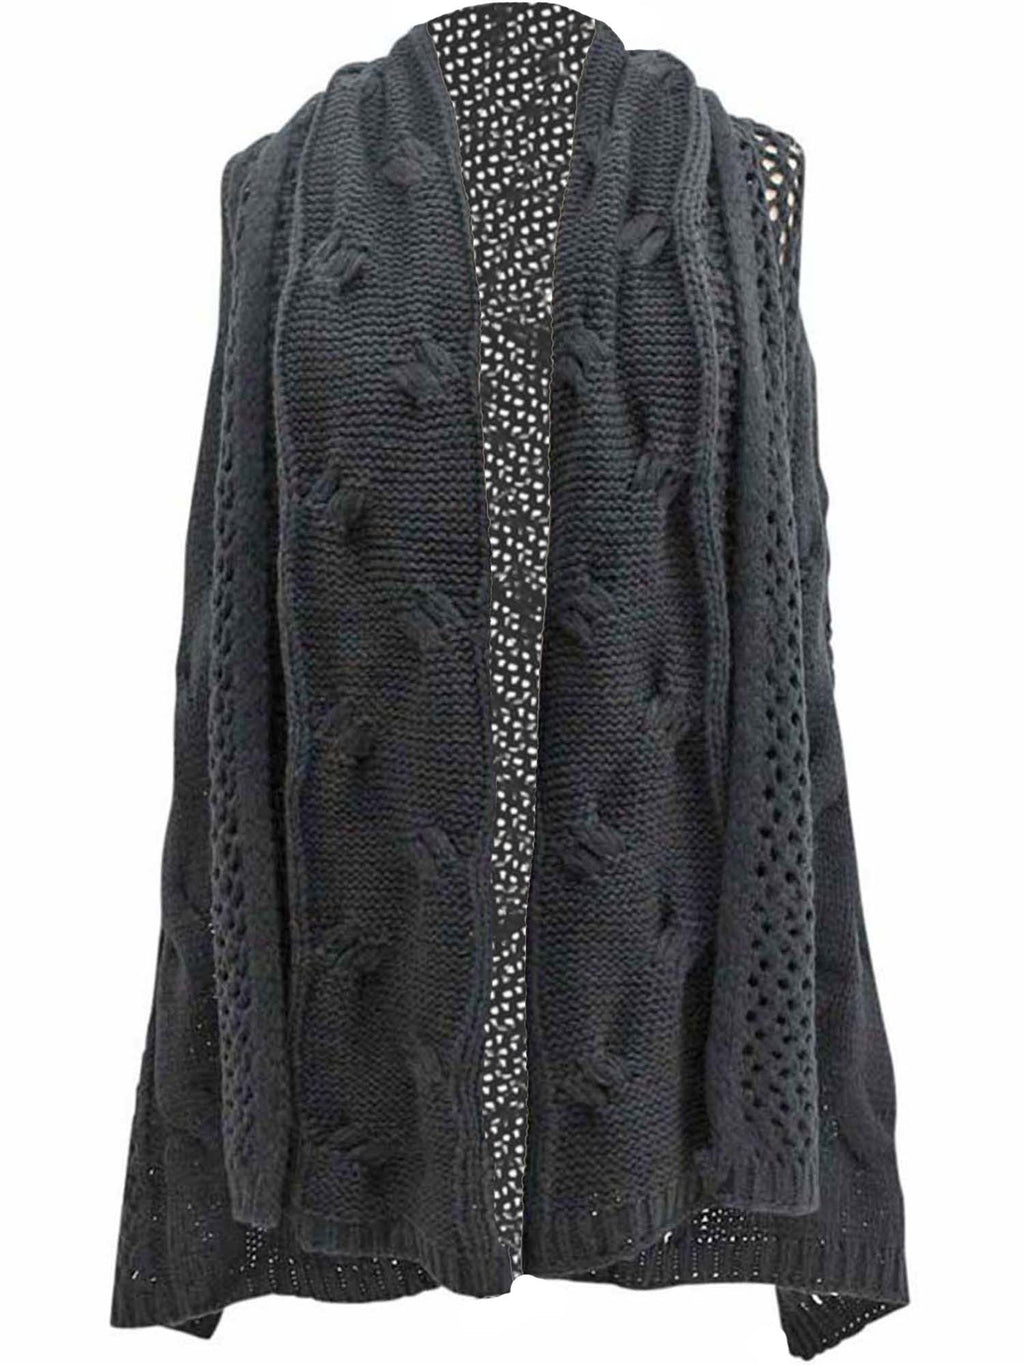 Black Open Knit Versatile Poncho Sweater Vest